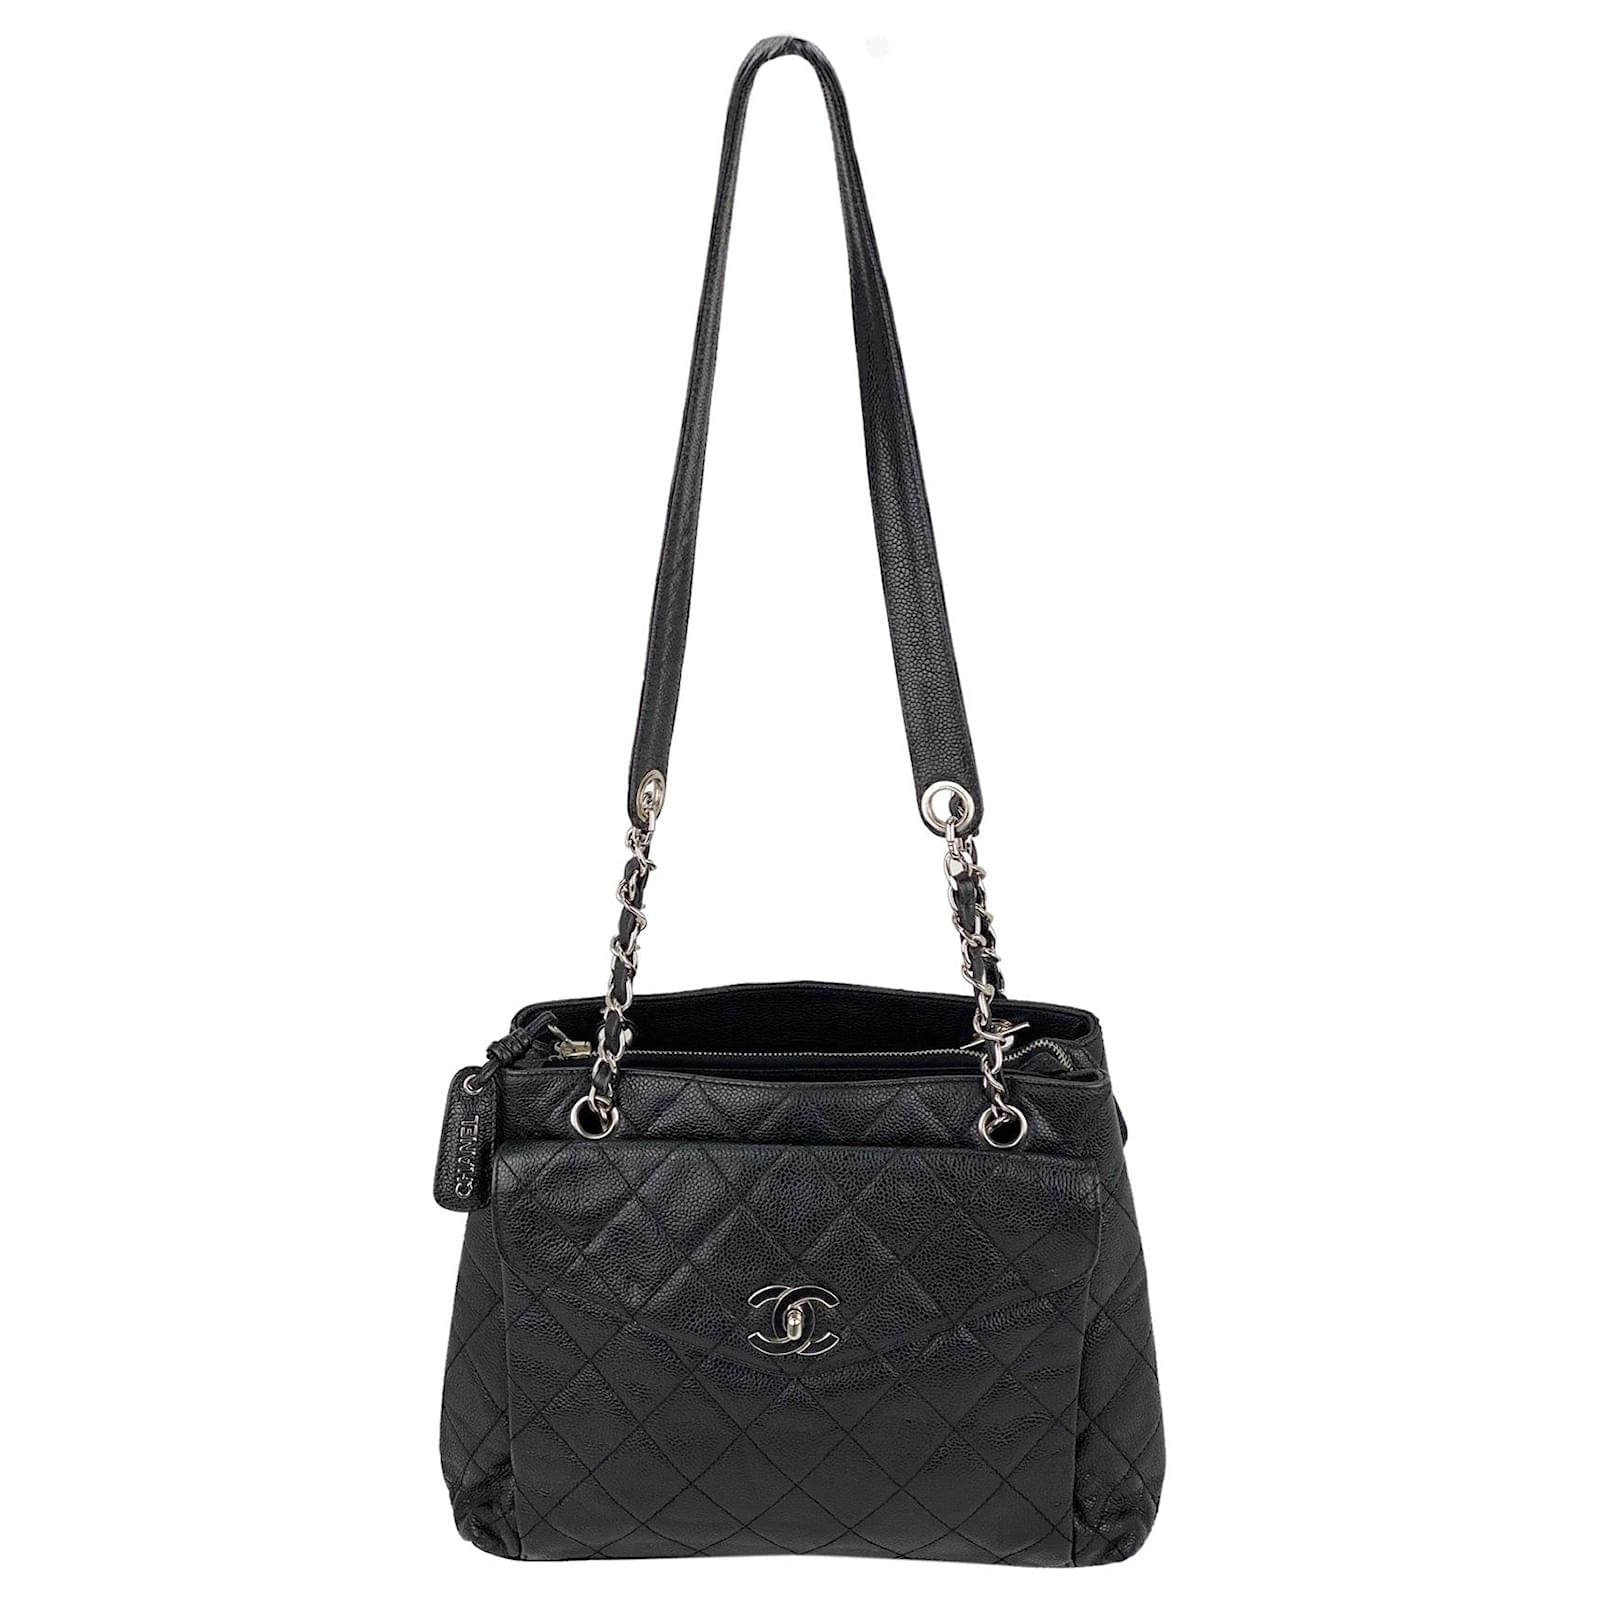 chanel crossbody black purse leather